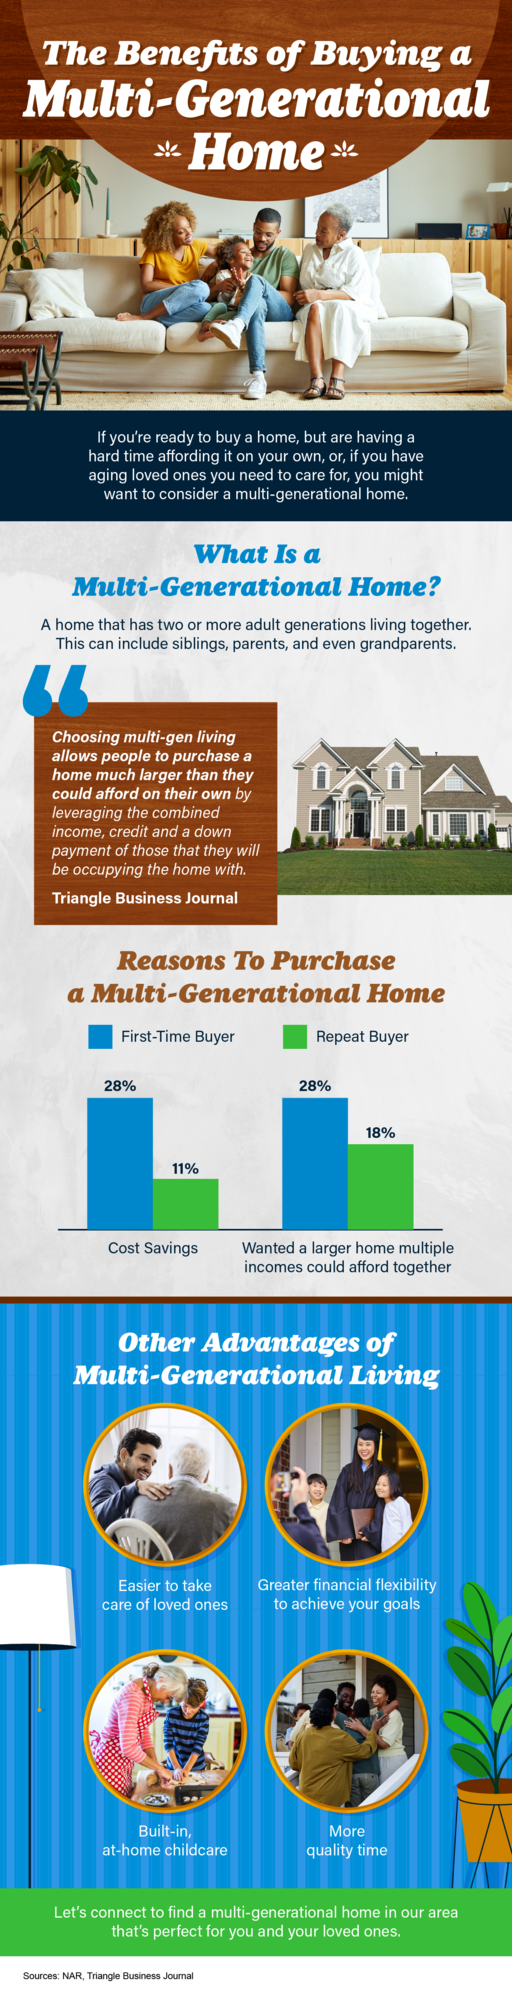 Multigenerational Housing Benefits